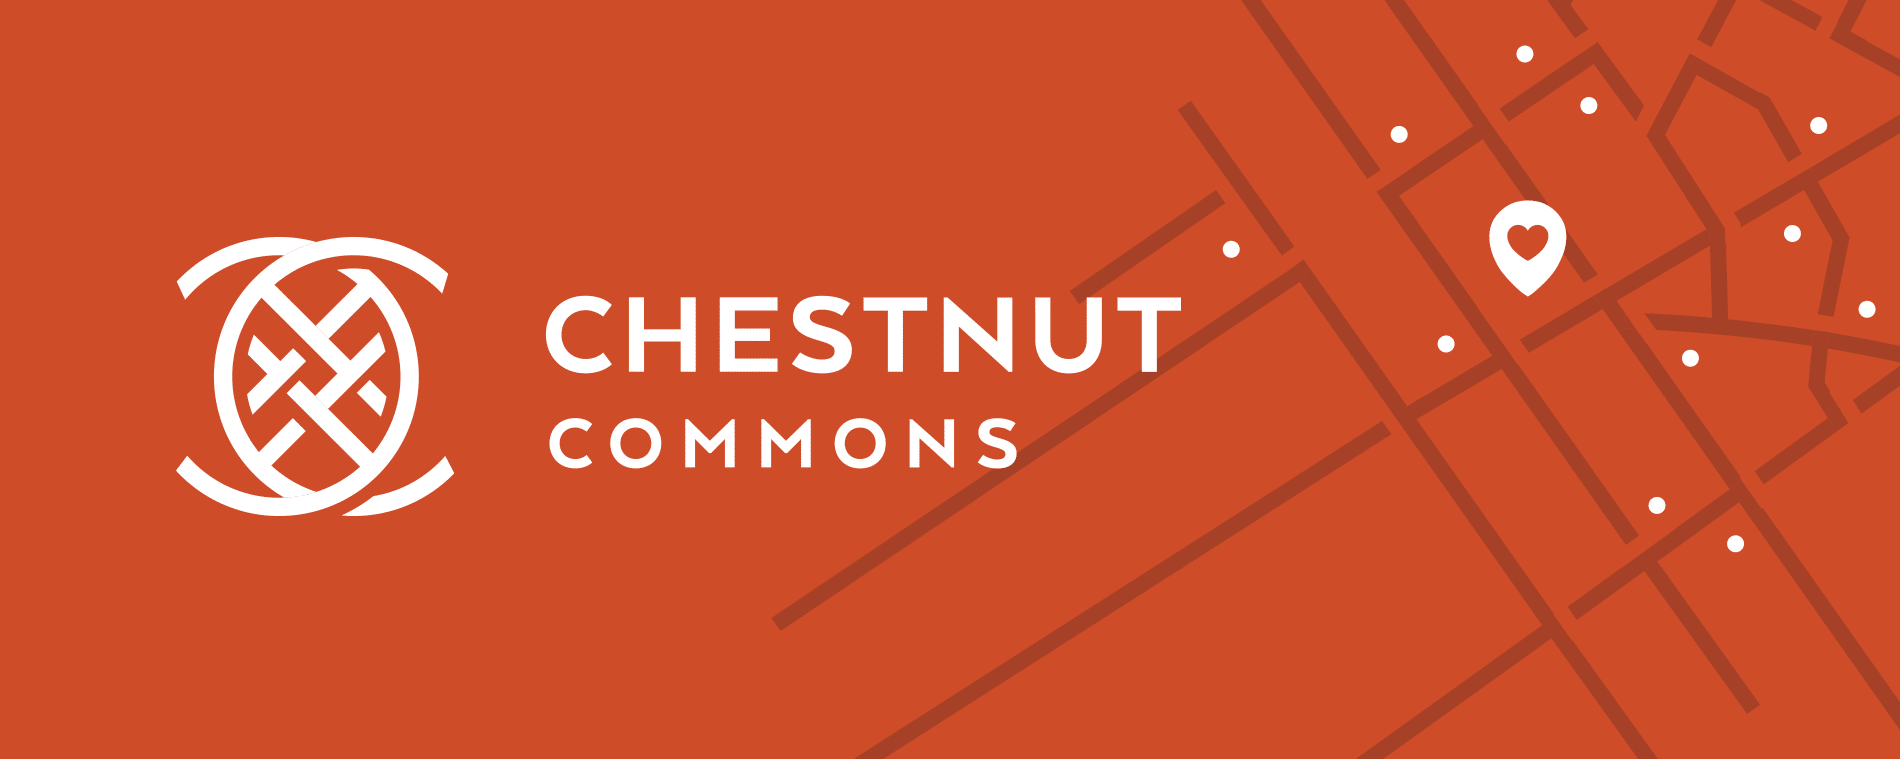 Chestnut Commons logo reversed out